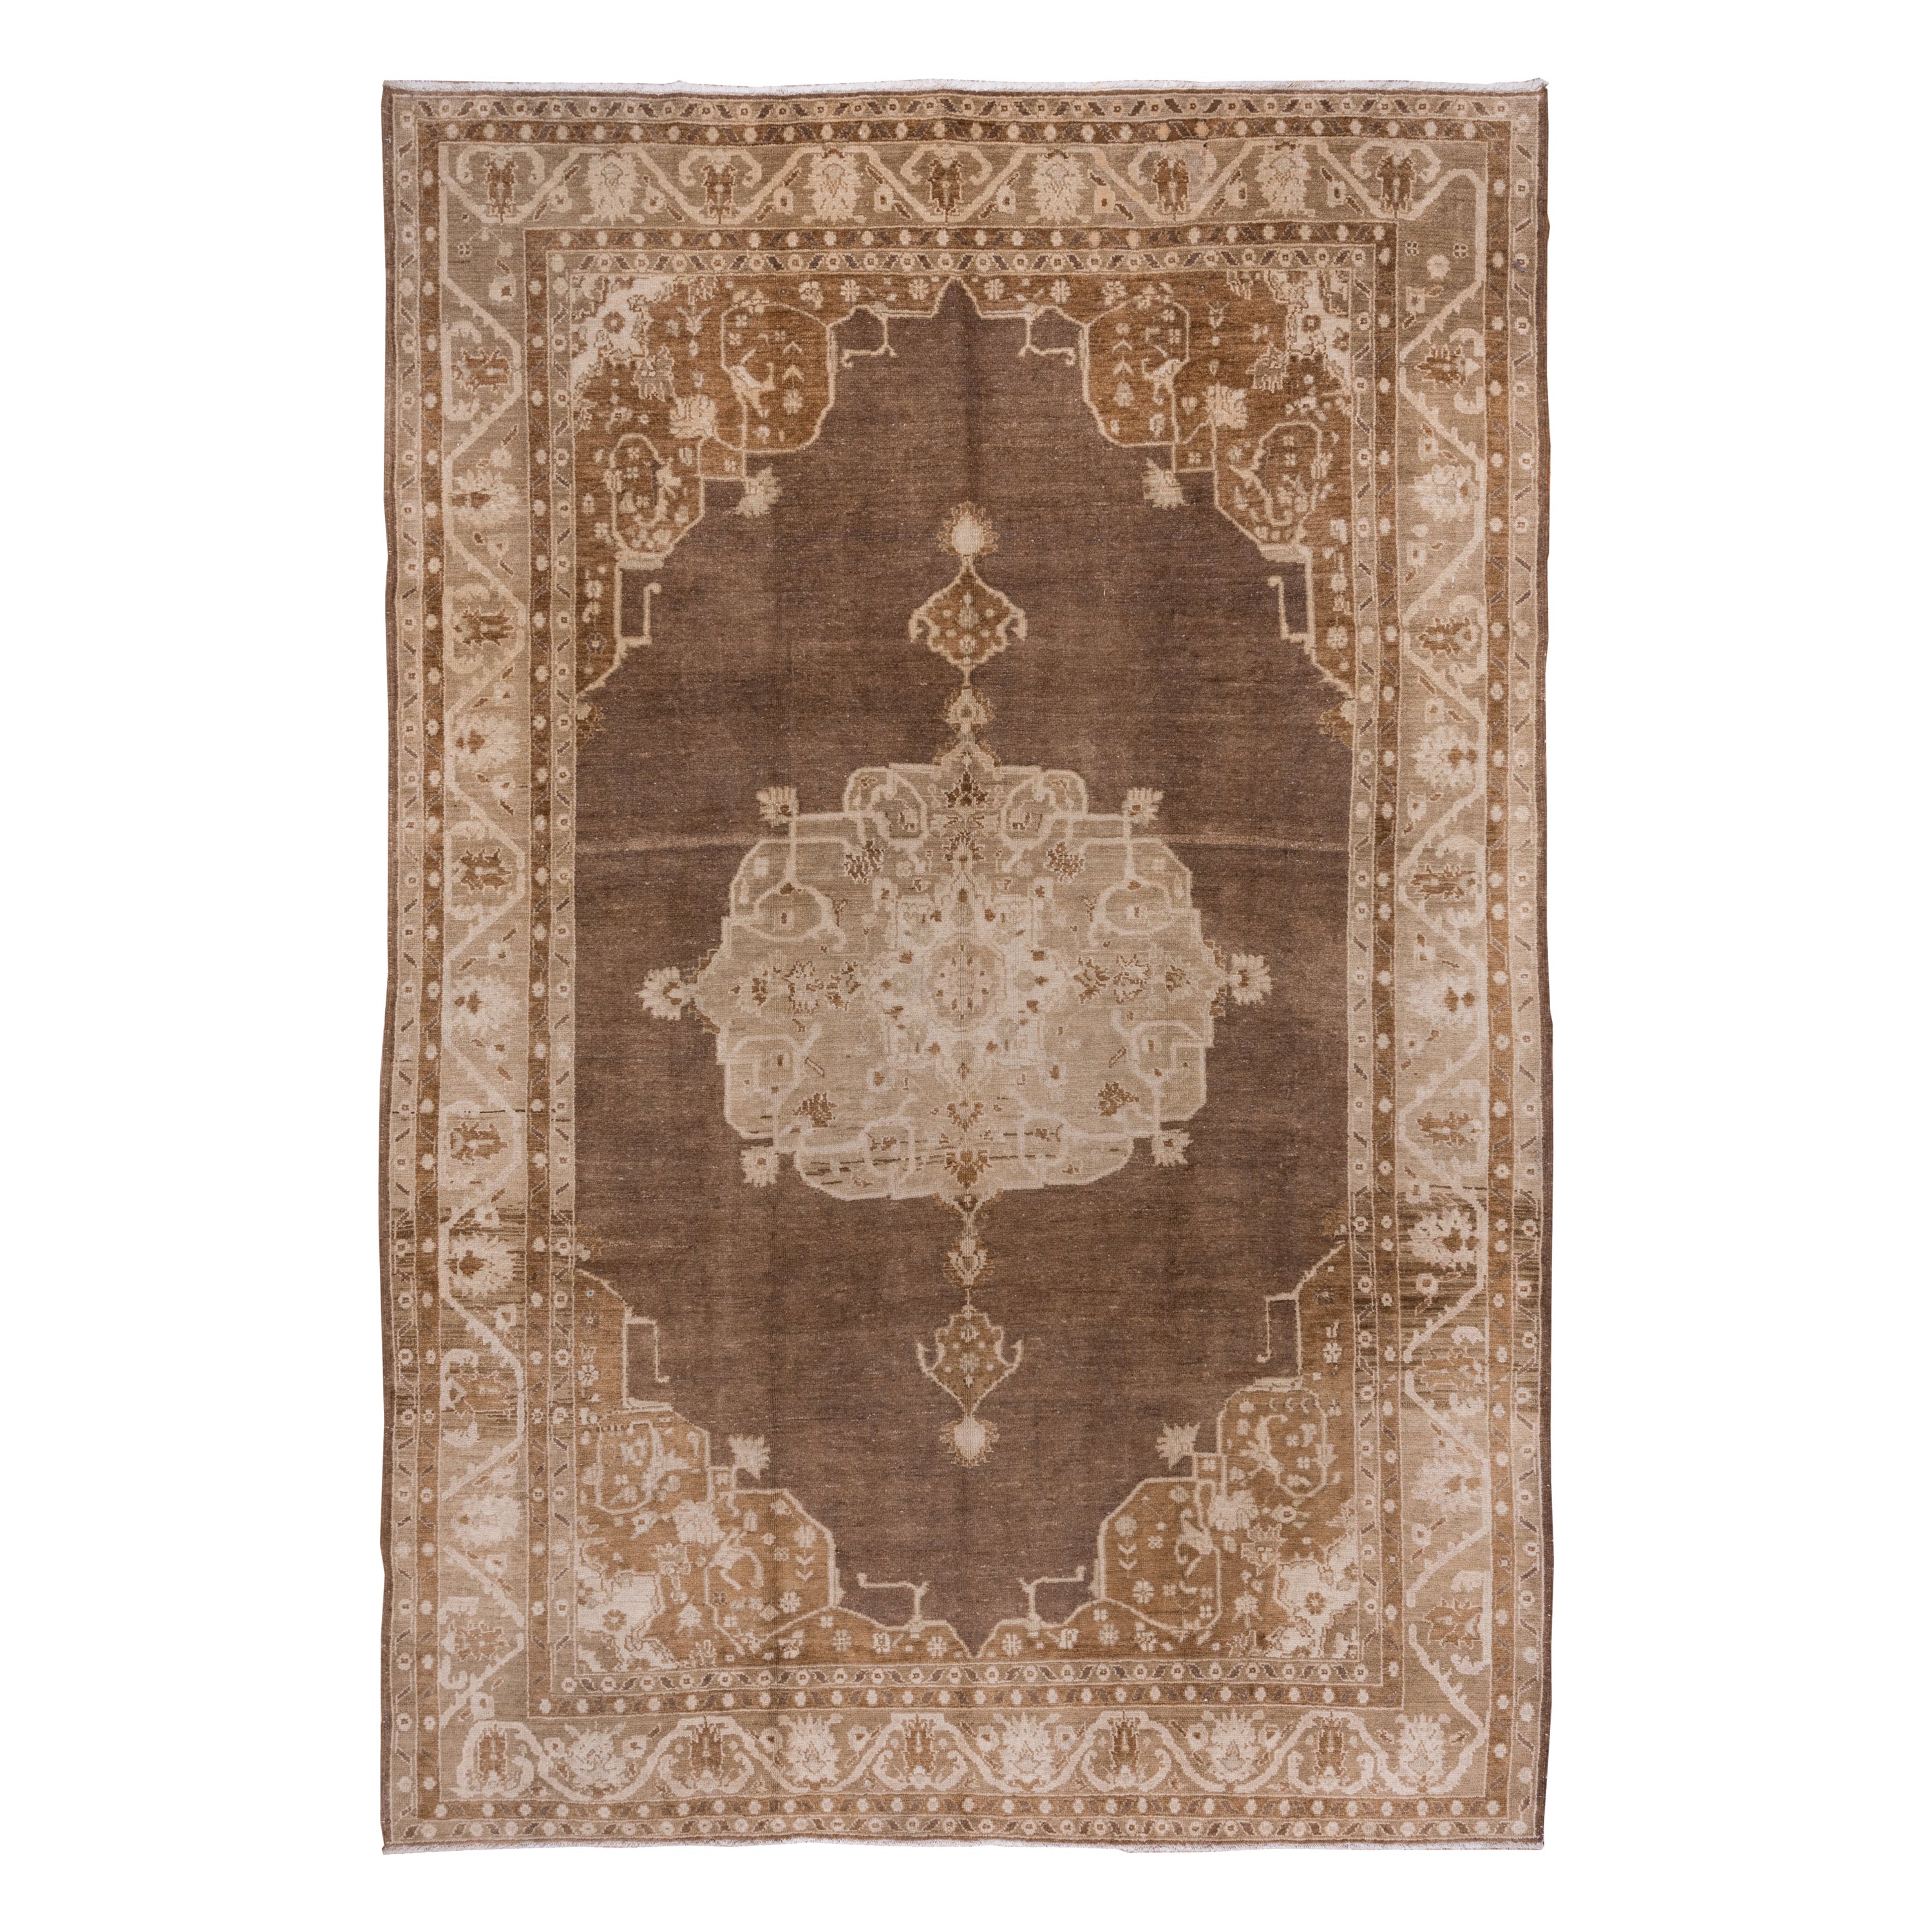 Antique Turkish Oushak Carpet, Brown Field, Light Brown Borders, Circa 1930s For Sale